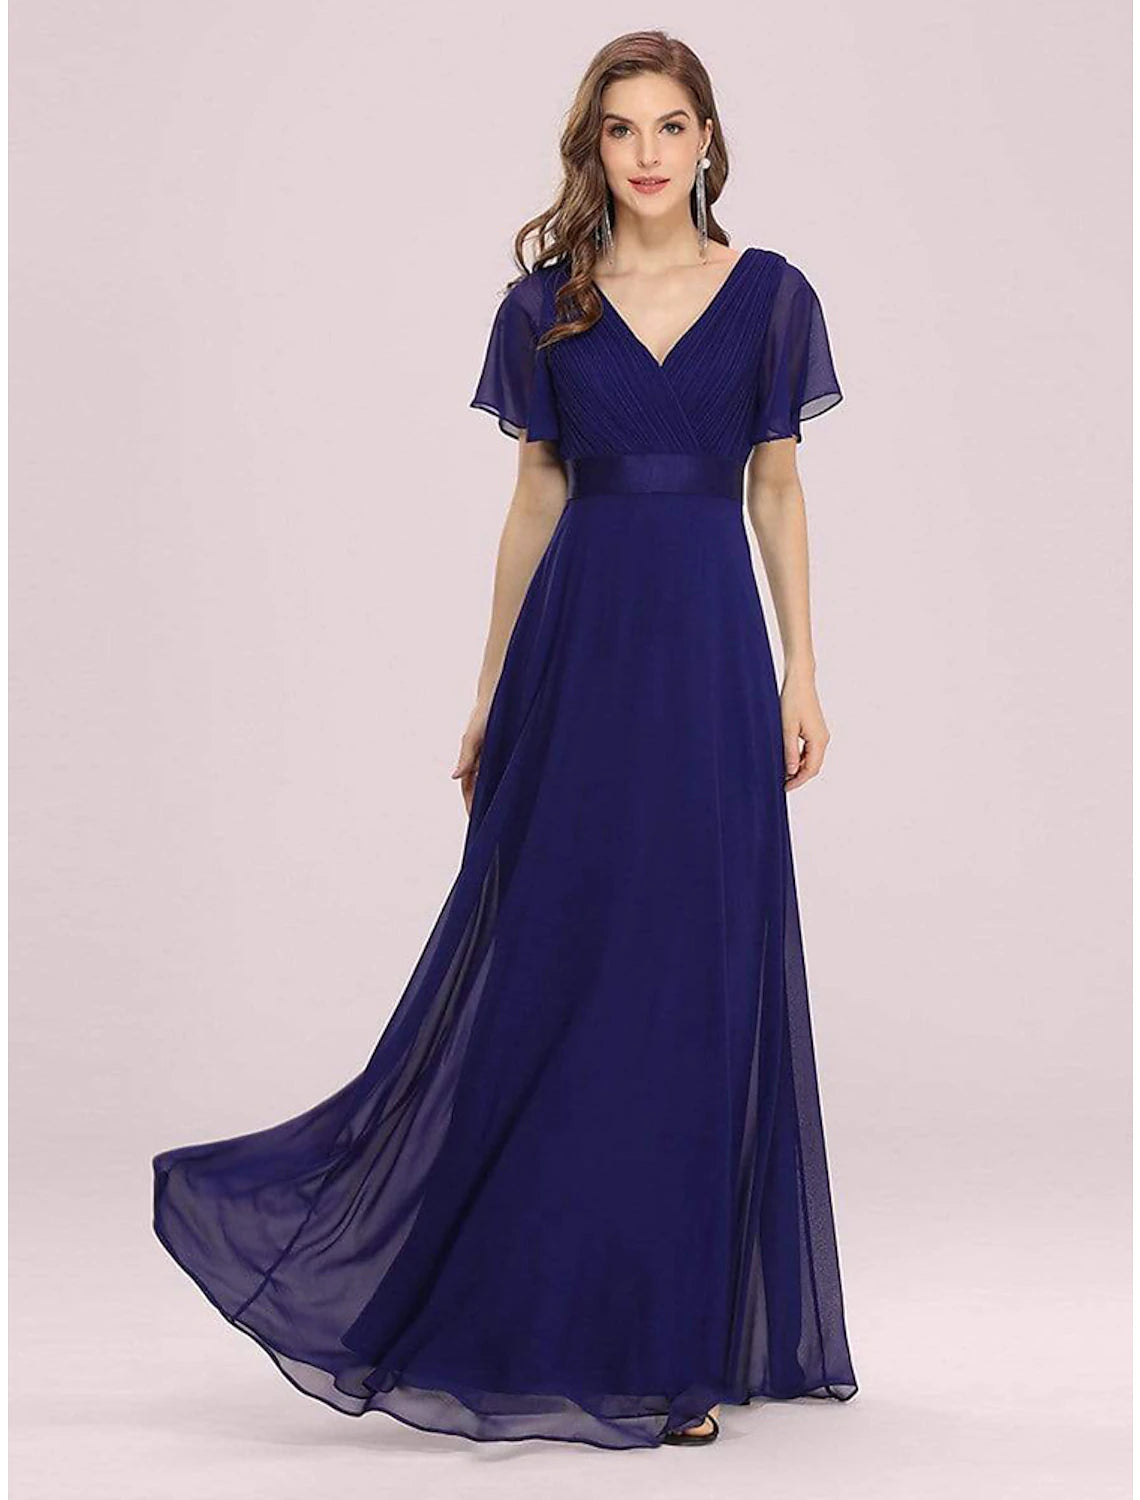 A-Line Evening Gown Empire Dress Wedding Guest Formal Evening Floor Le ...